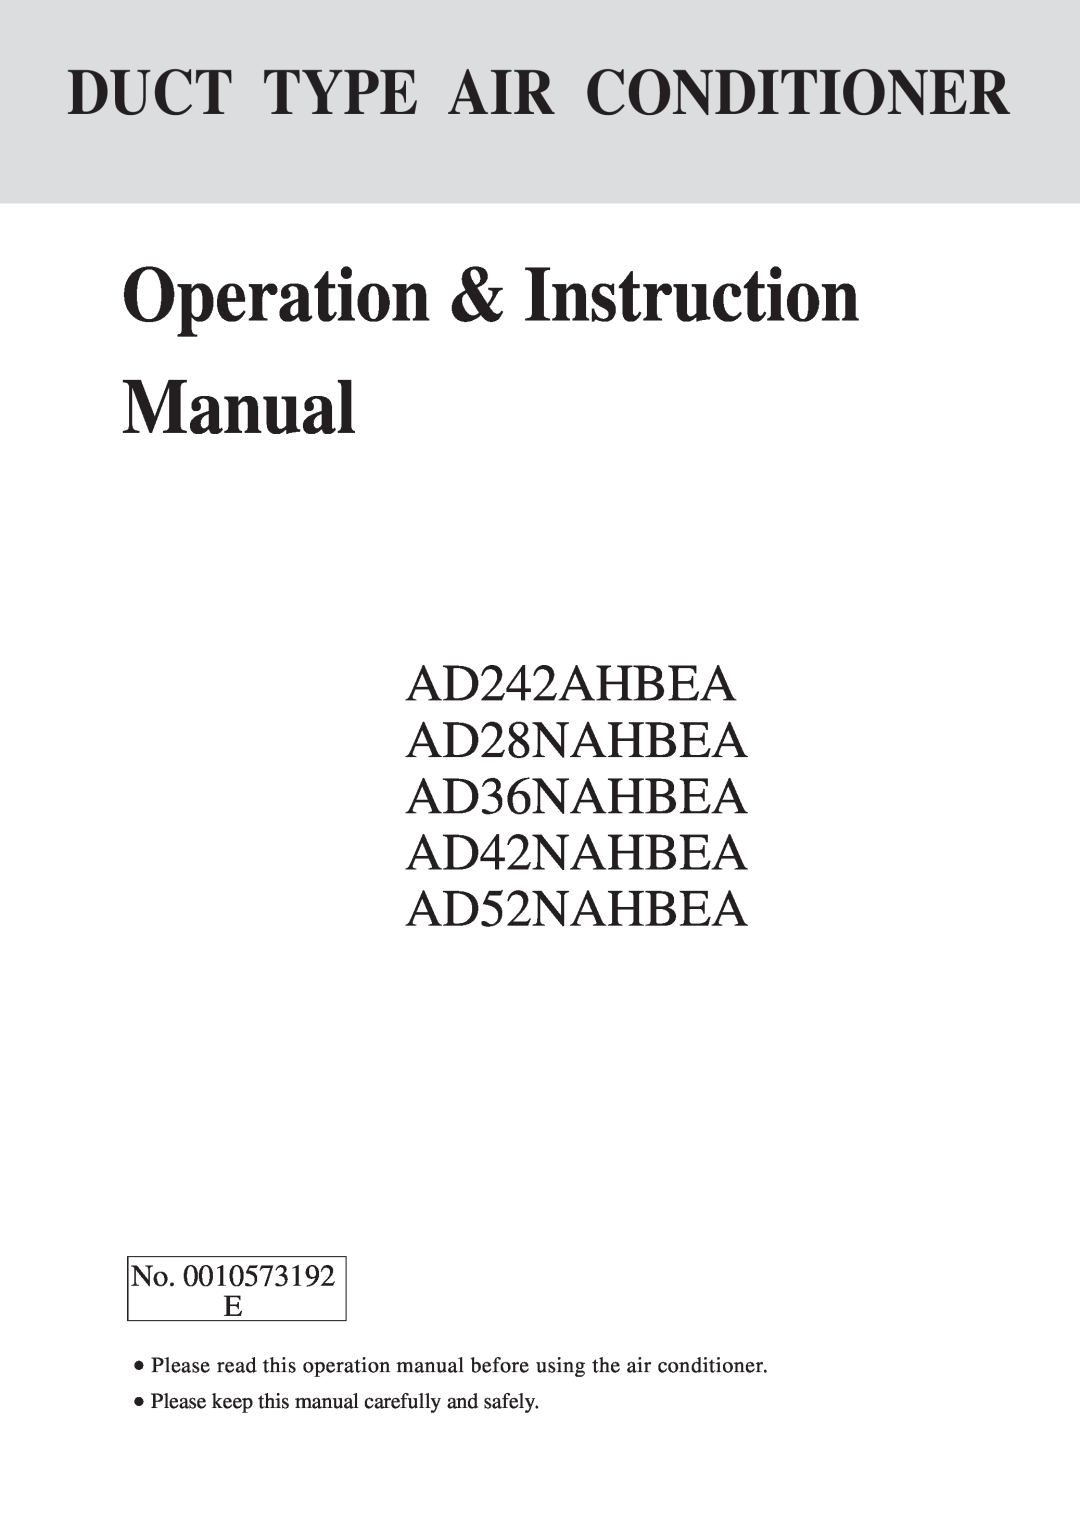 Haier AD52NAHBEA instruction manual No. E, Duct Type Air Conditioner, AD242AHBEA AD28NAHBEA AD36NAHBEA AD42NAHBEA 